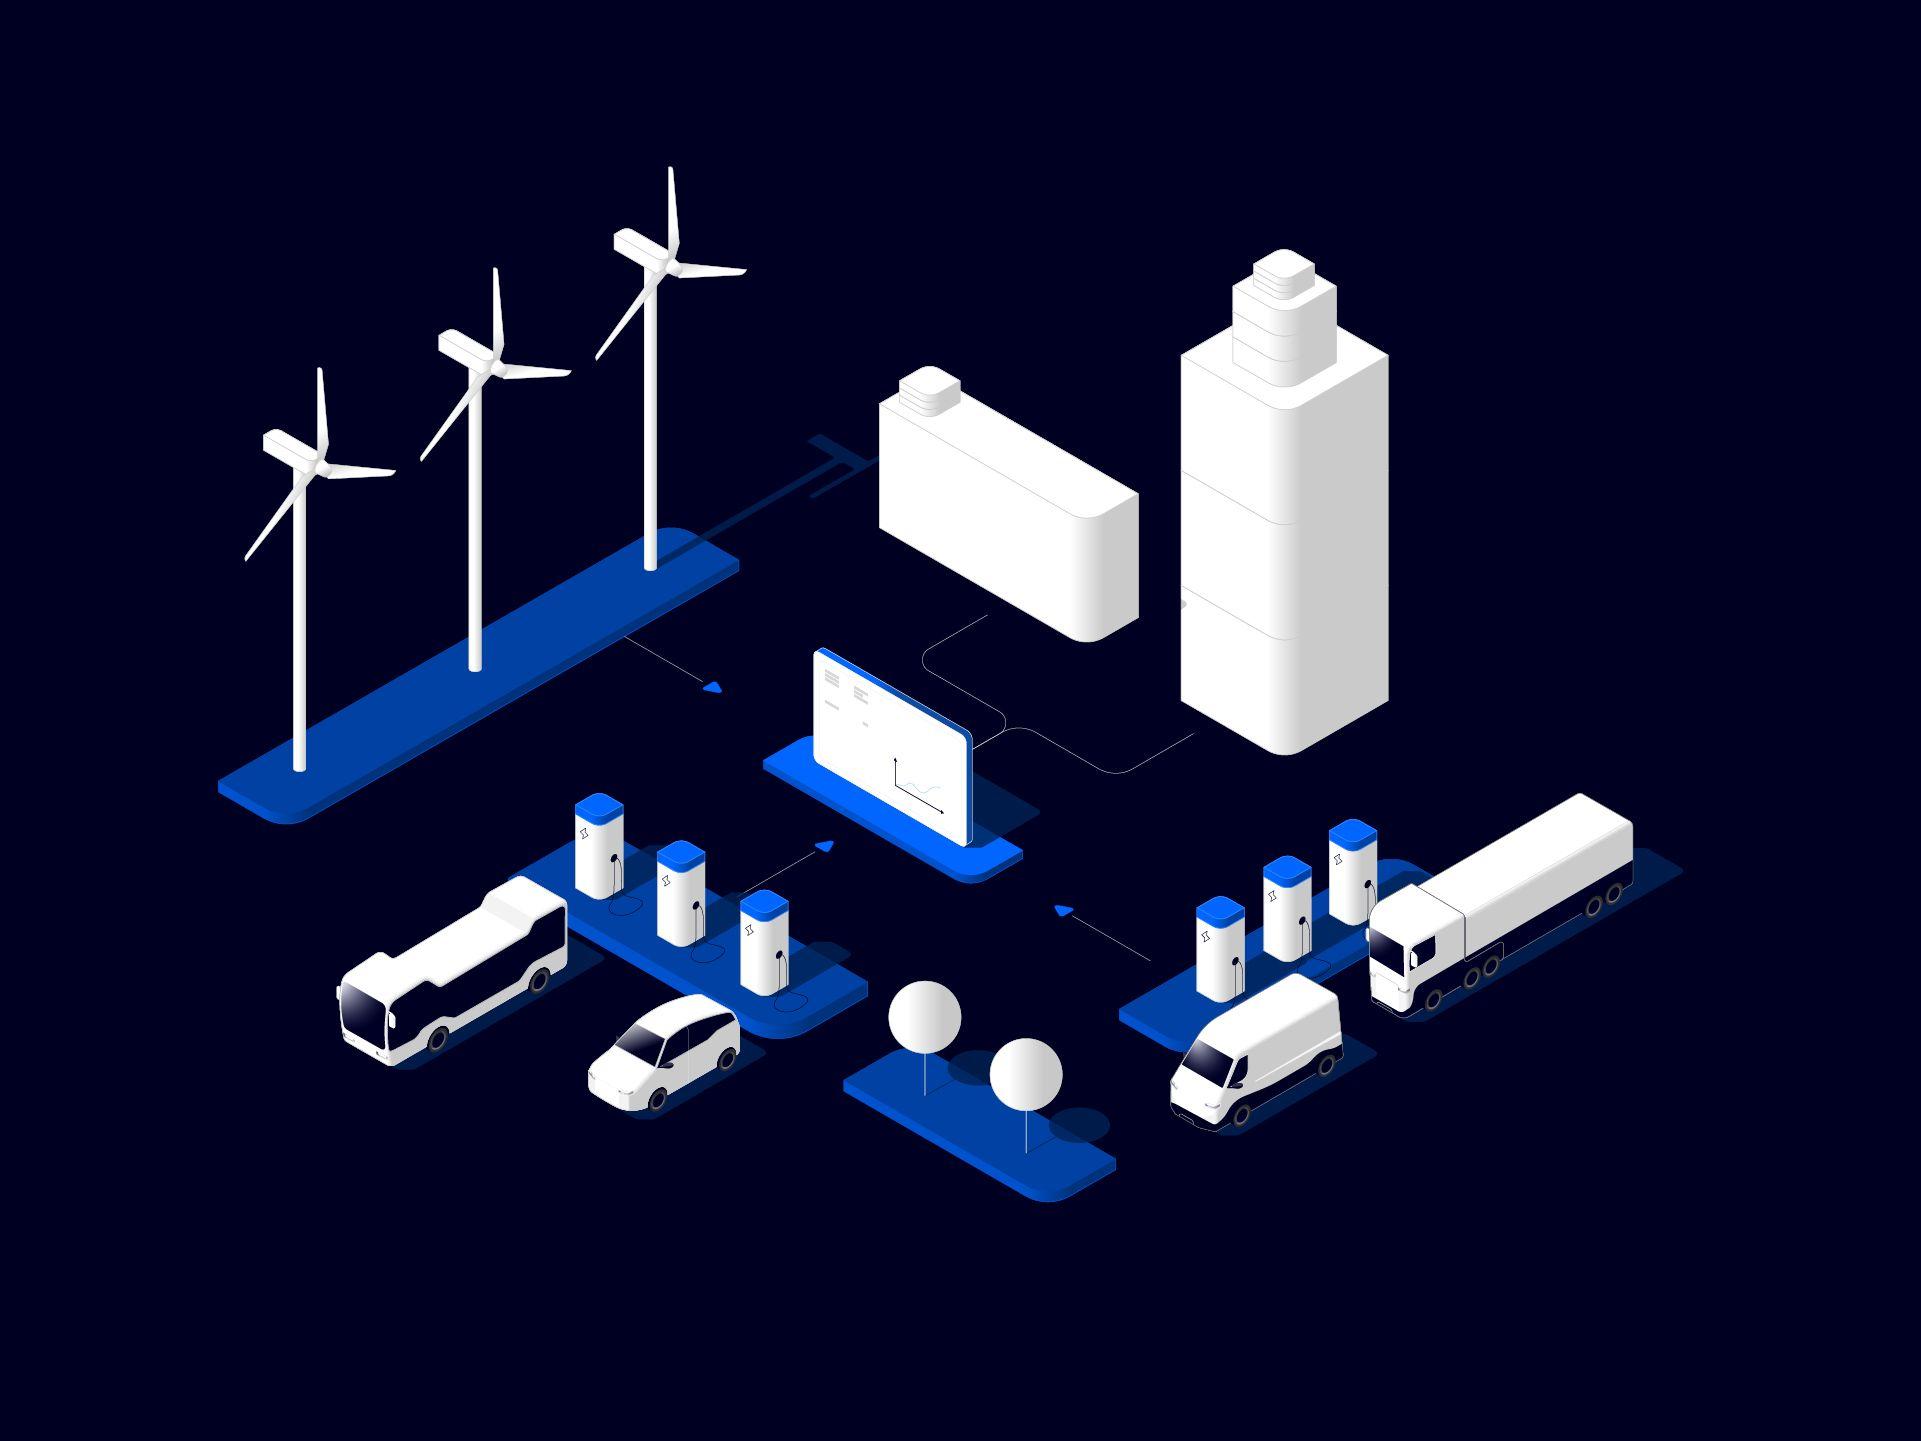 Infographic explaining interoperability of the charging and energy management system